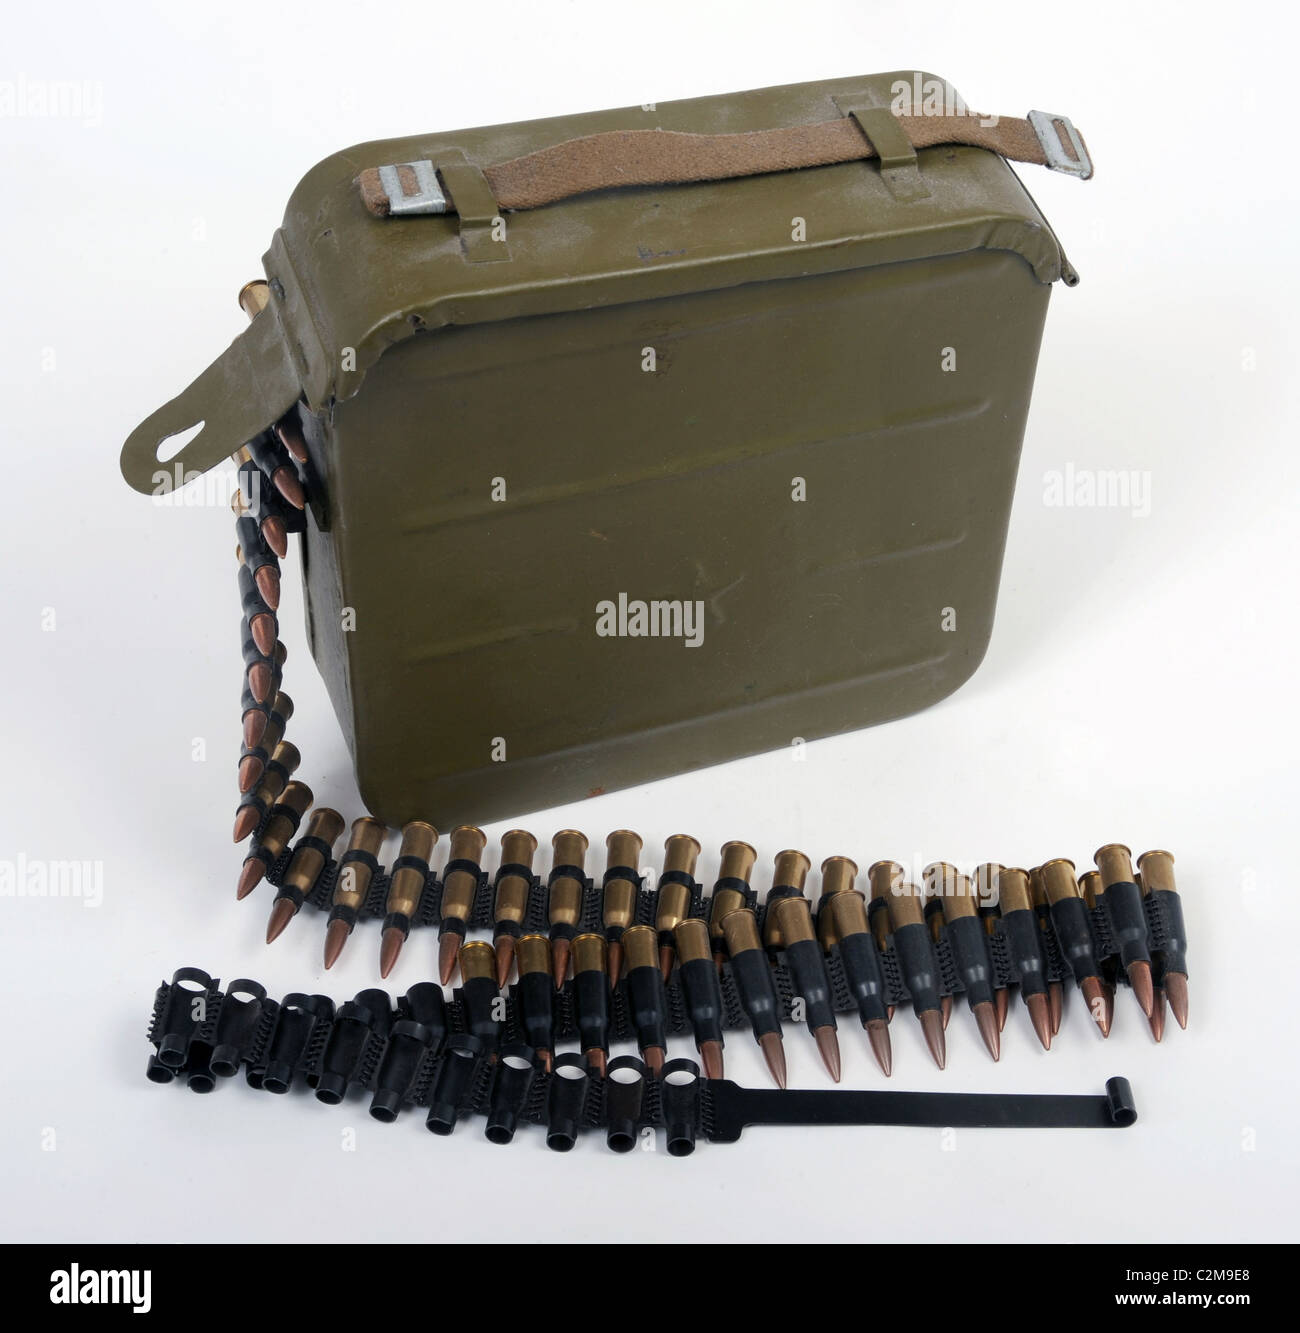 Cinturón de balas con balas fotografías e imágenes de alta resolución -  Alamy